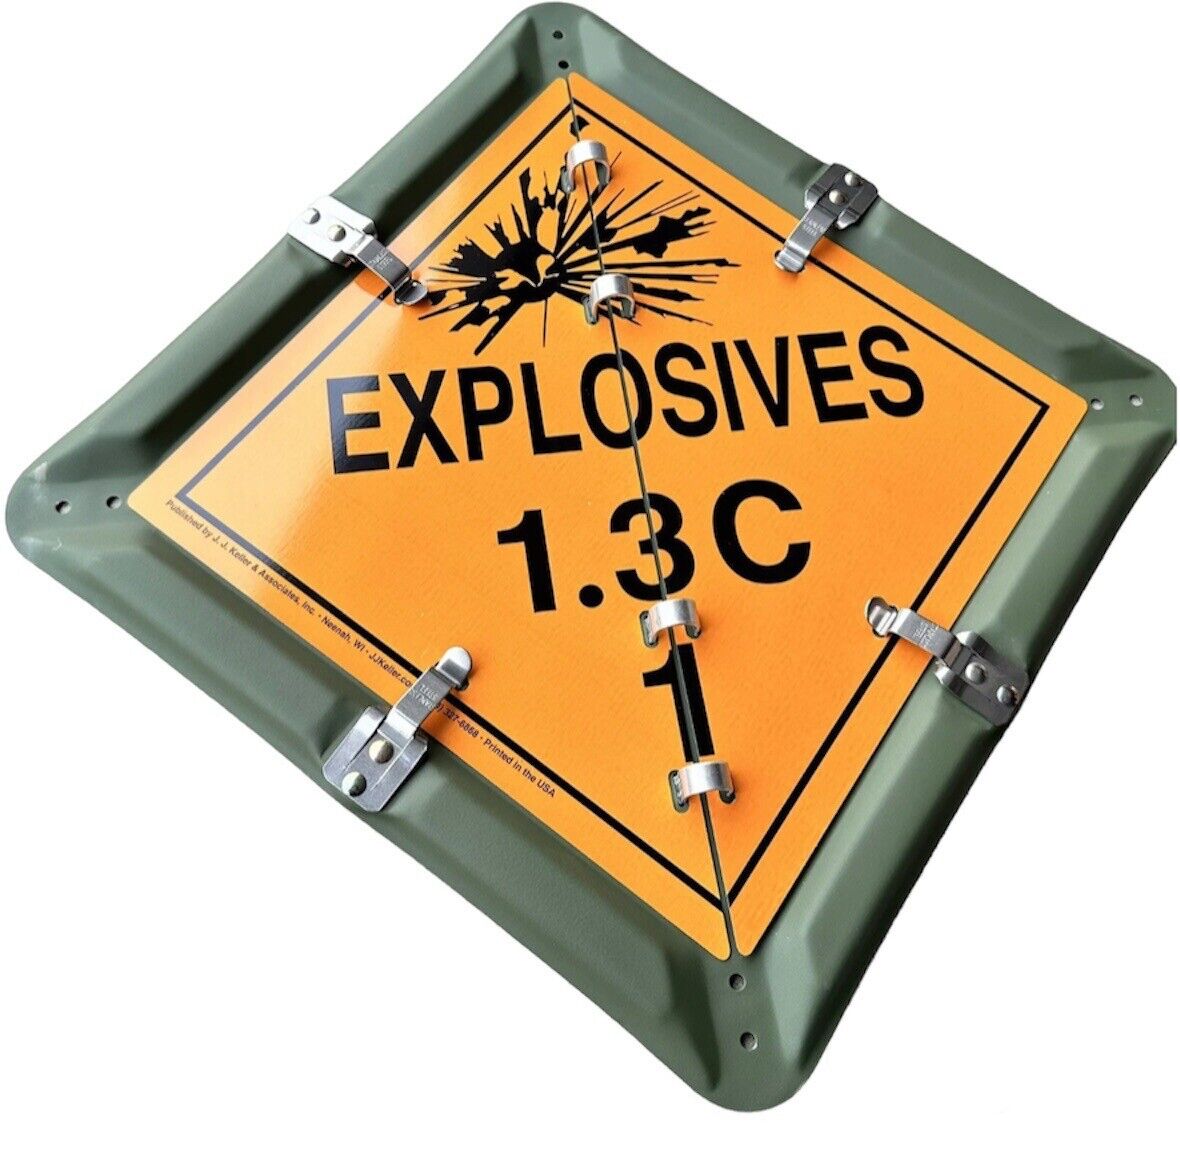 18.5” Full Metal EXPLOSIVES 1.3C US Military Placard Ordinance Truck Hazard Sign